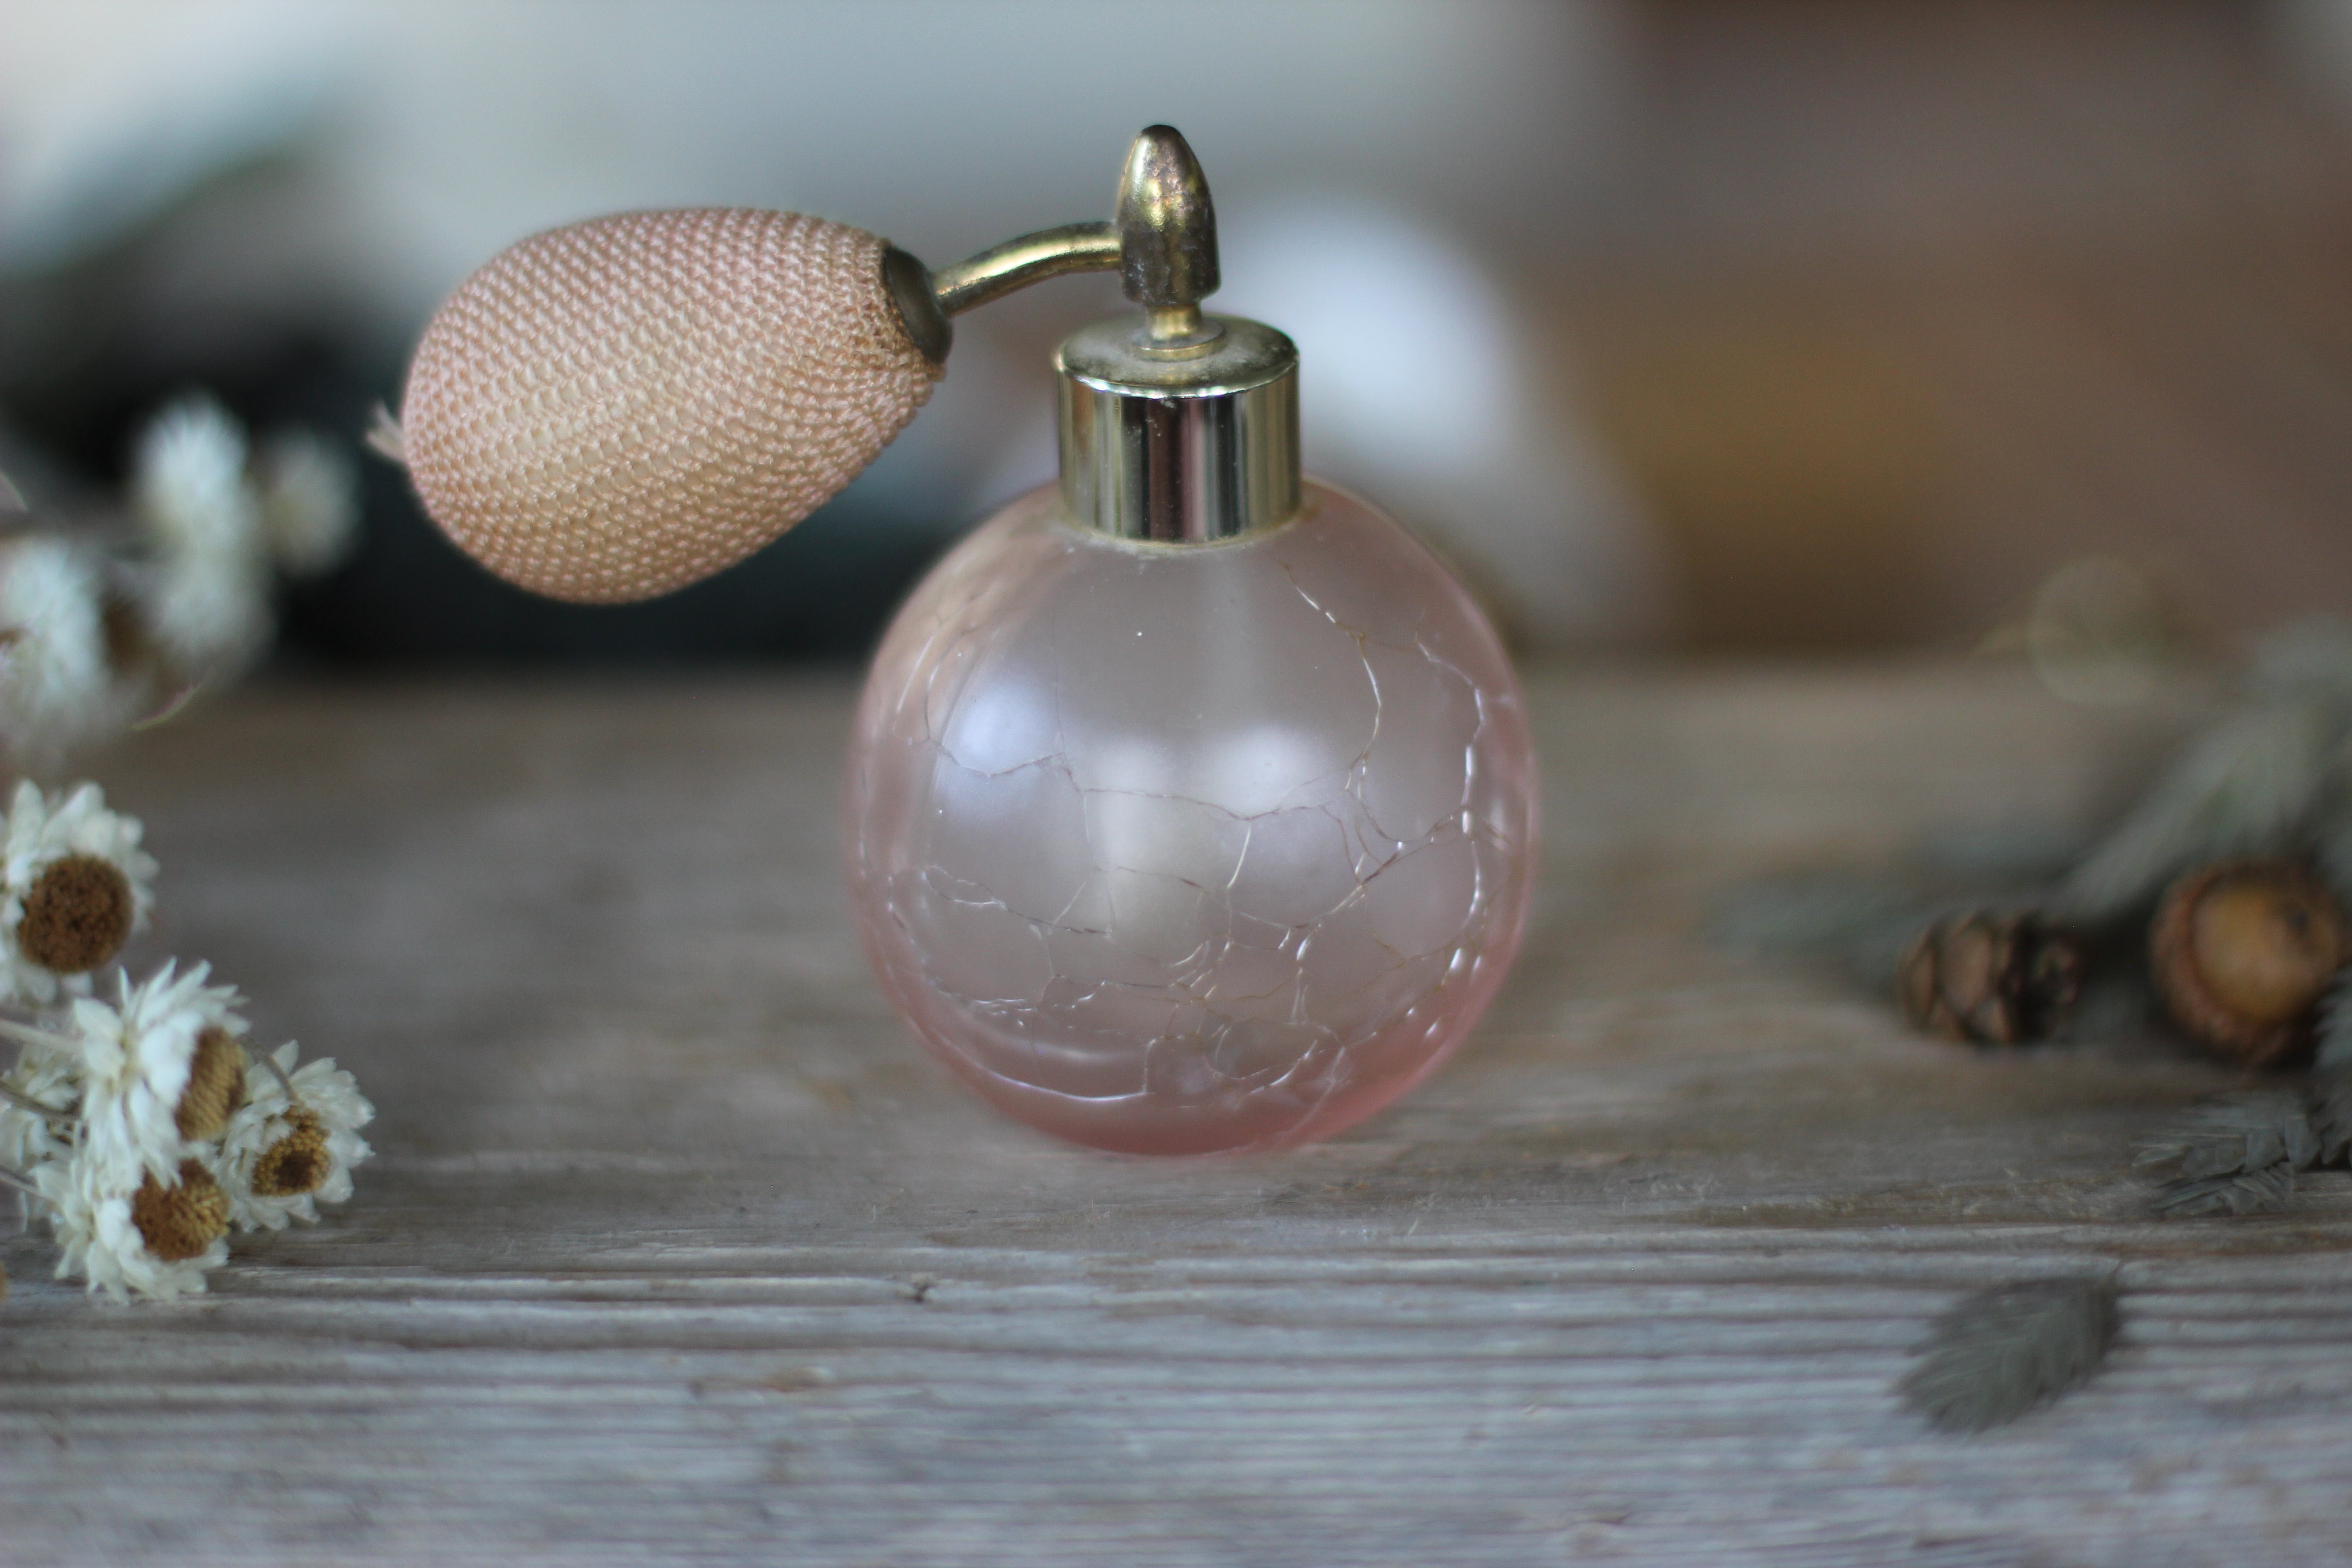 Antique Crackled Pink Automizer Perfume Bottle